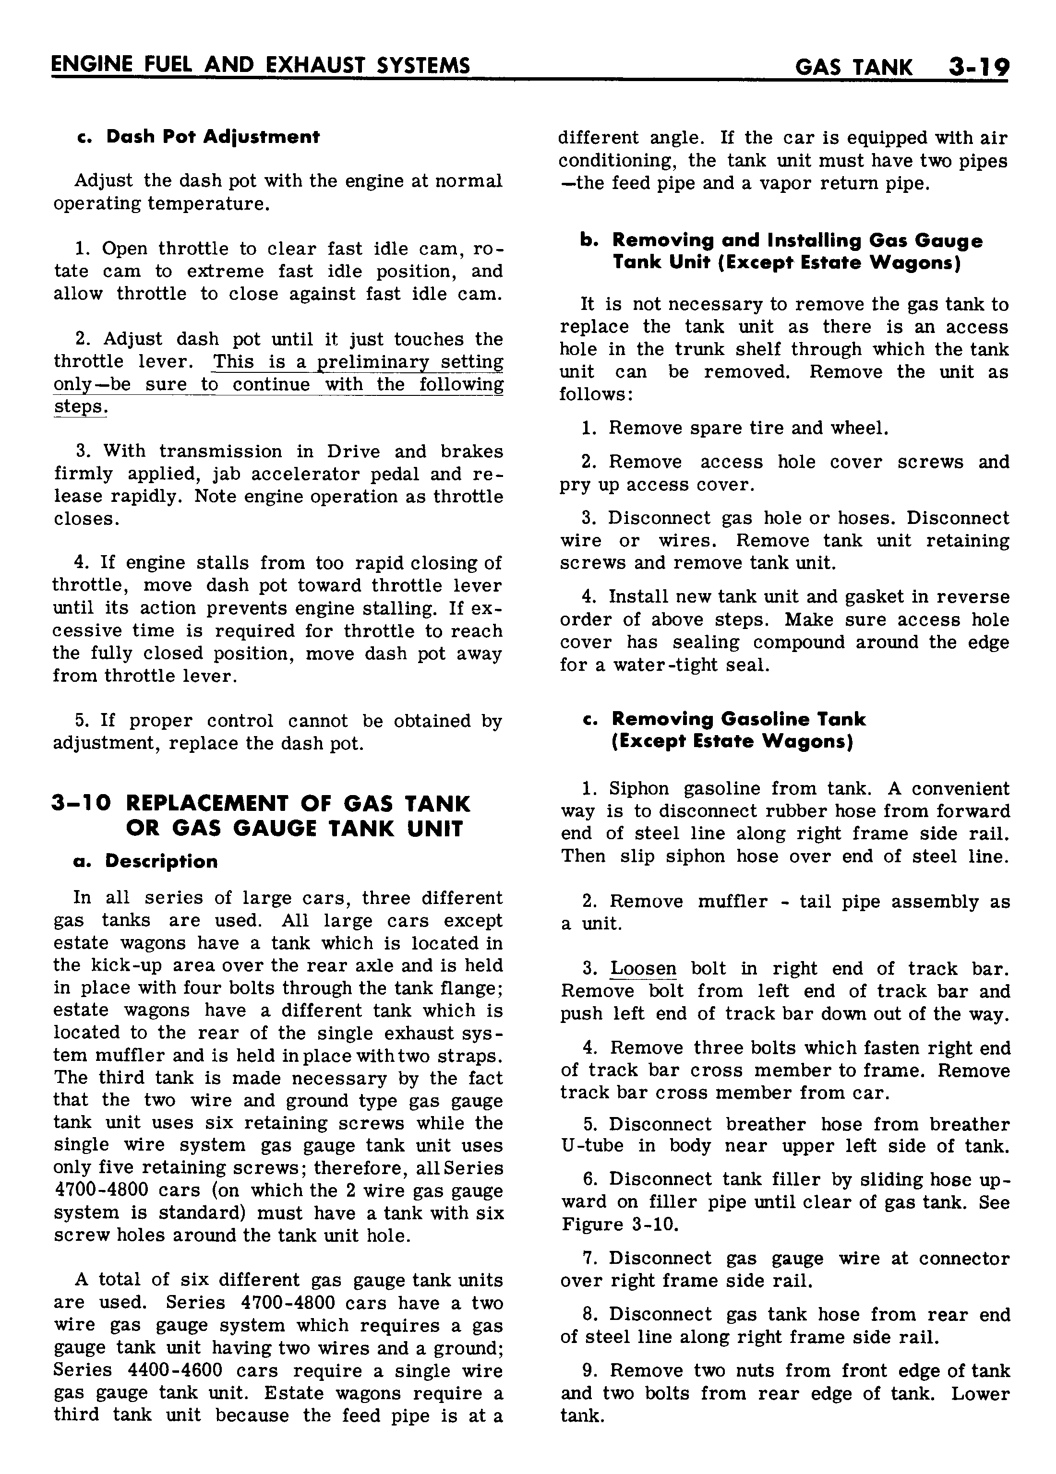 n_04 1961 Buick Shop Manual - Engine Fuel & Exhaust-019-019.jpg